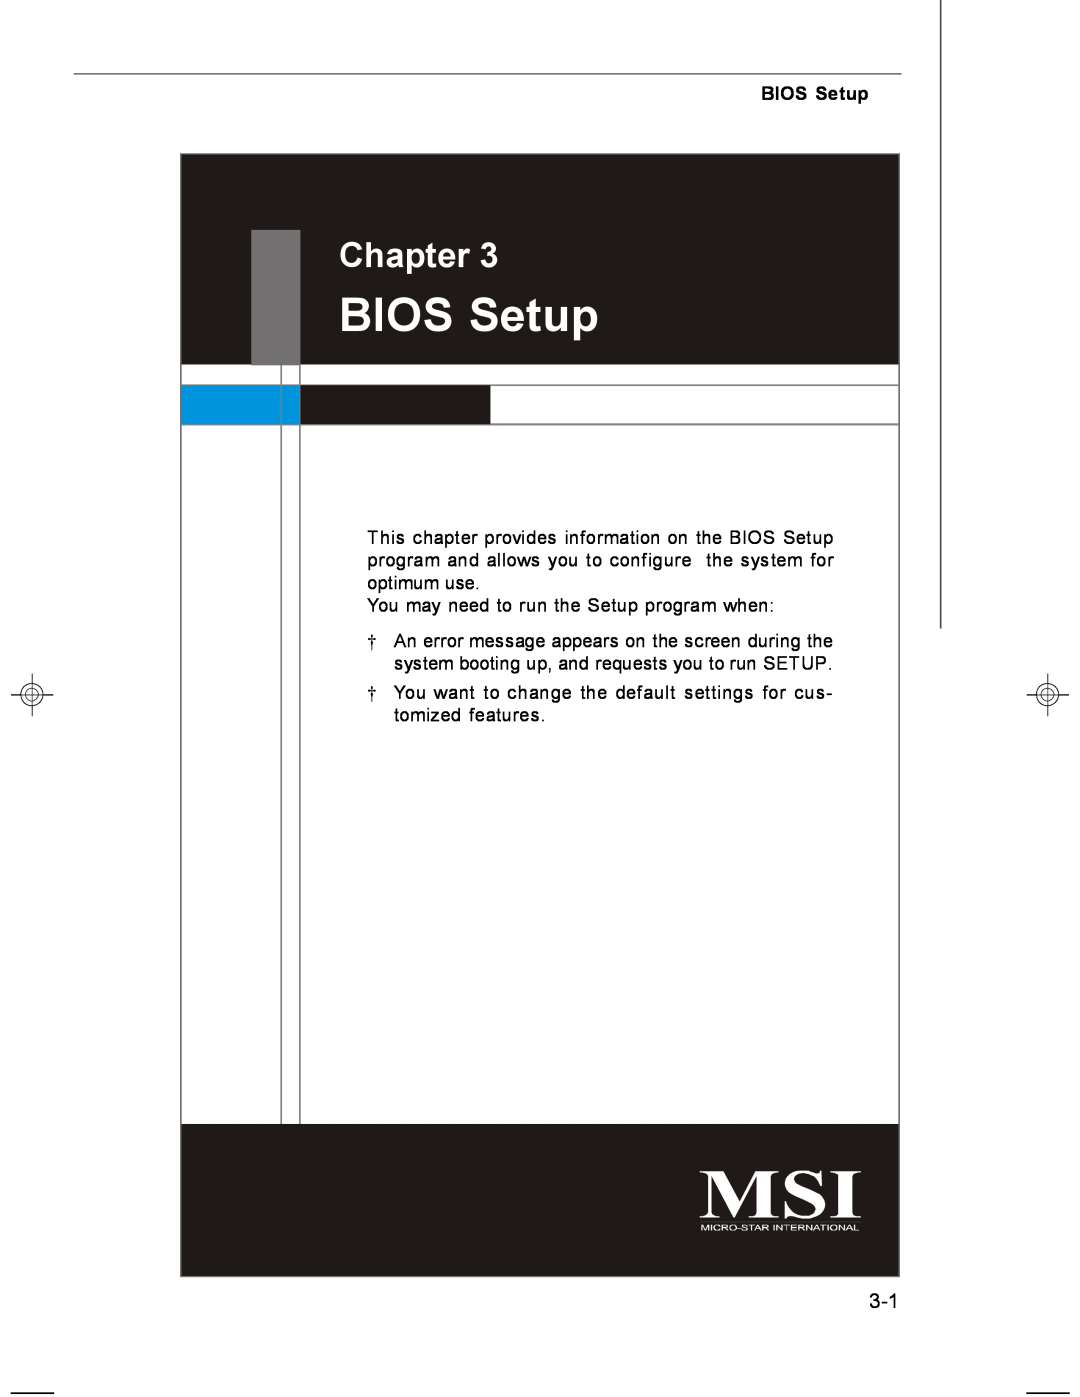 MSI MS-7255 manual BIOS Setup, Chapter 